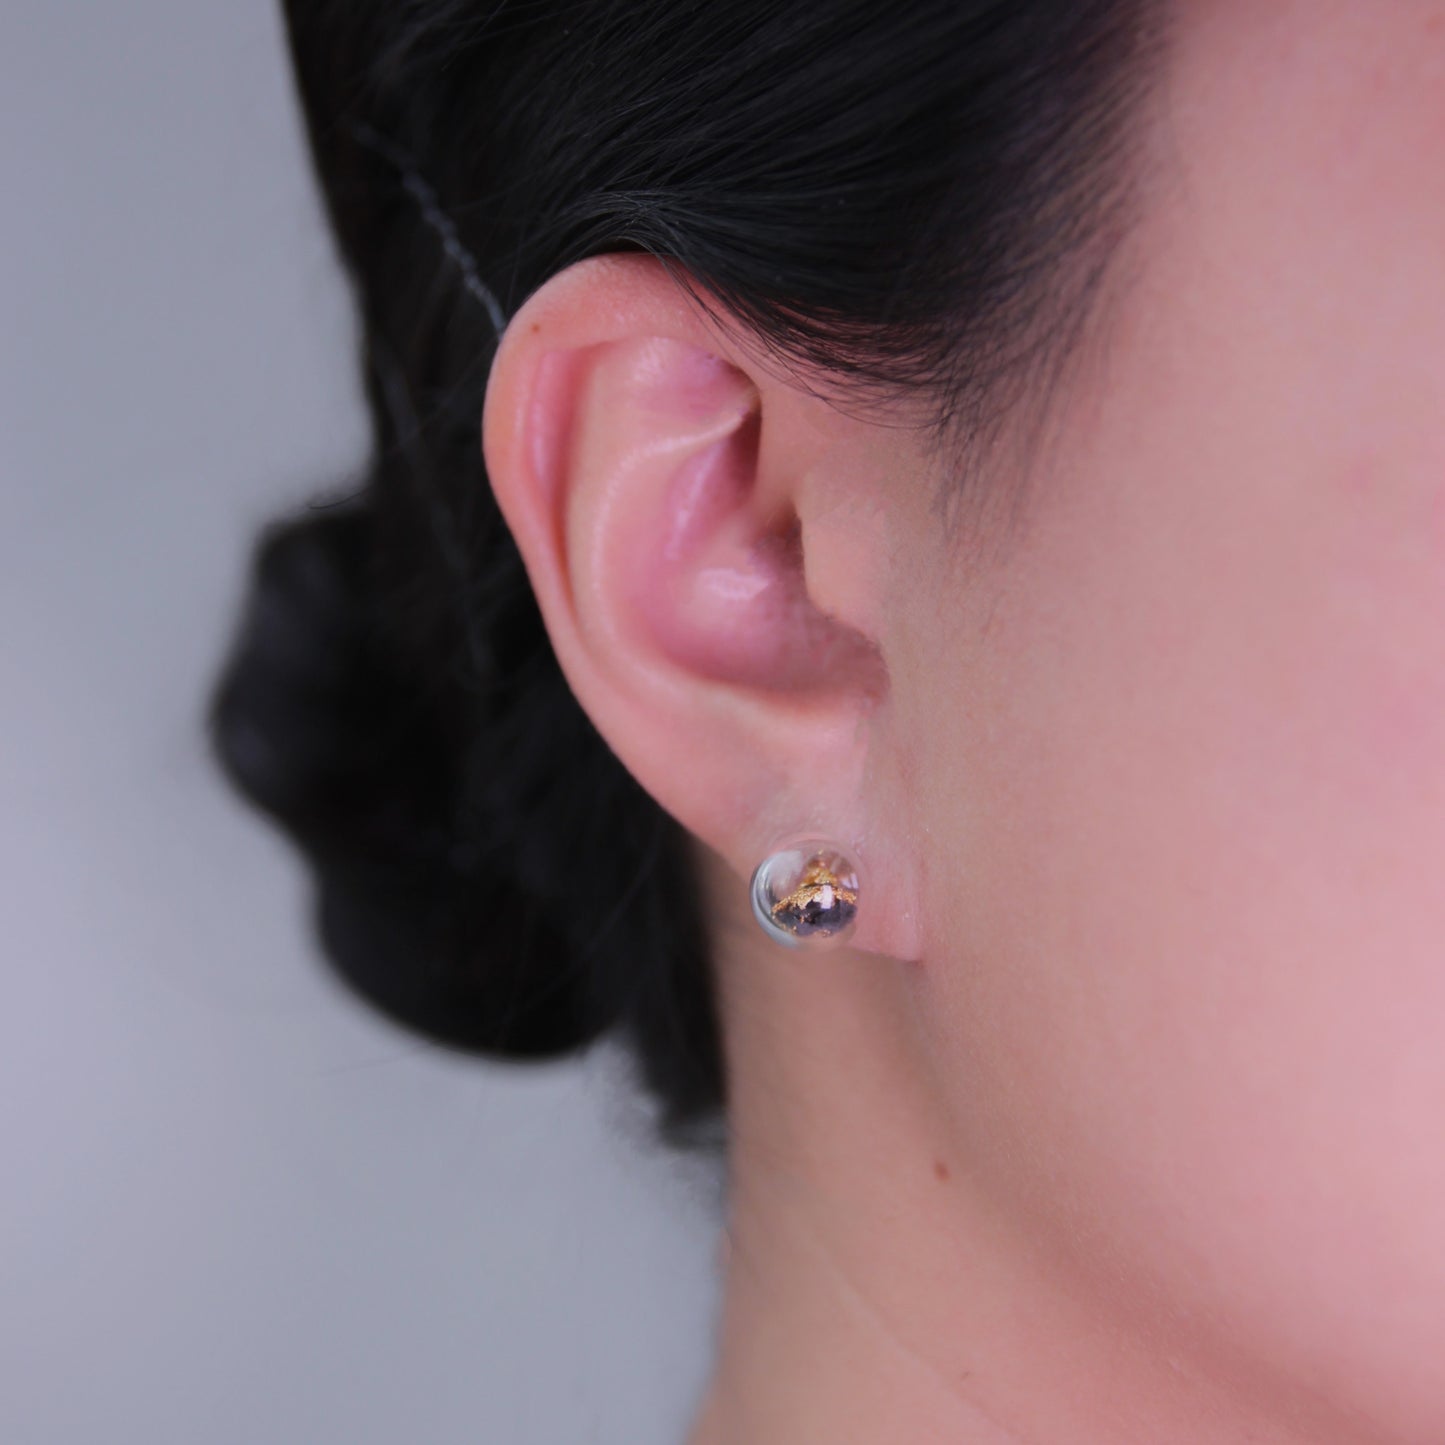 Glass Sphere Stud Earrings - Small - Black